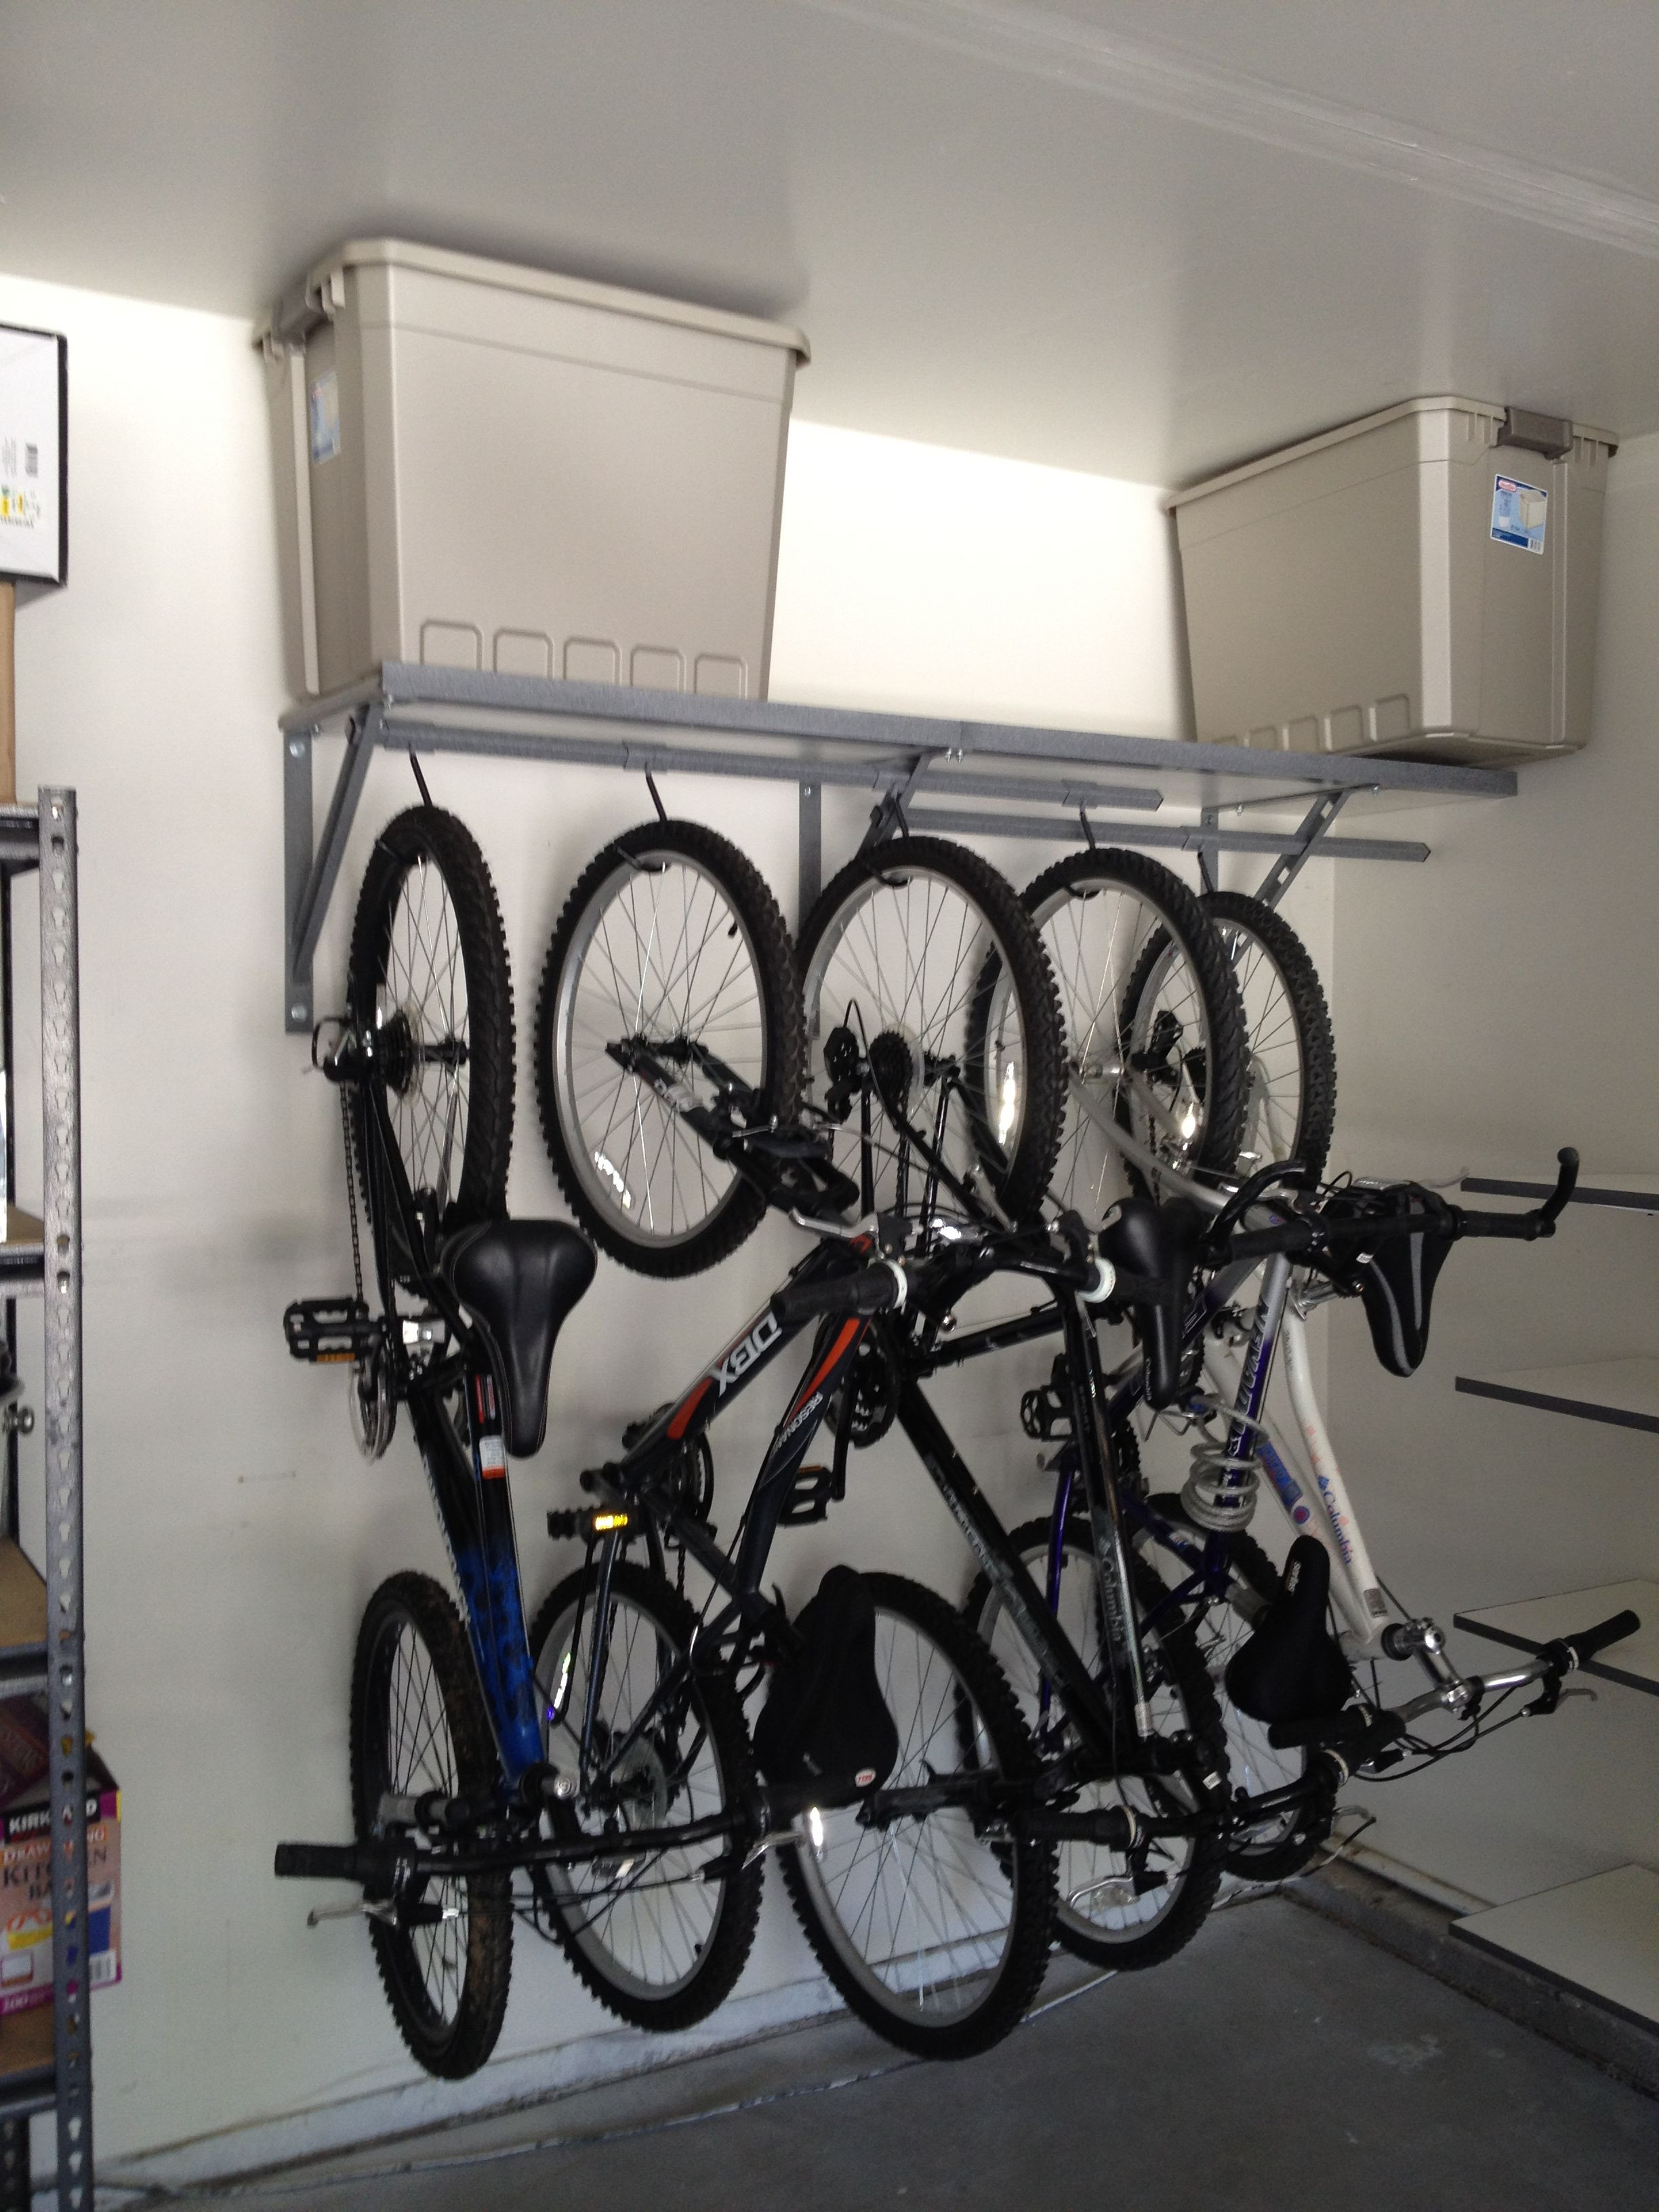 Best ideas about Bike Storage Rack For Garage
. Save or Pin garage bike storage Good ideas for the home Now.